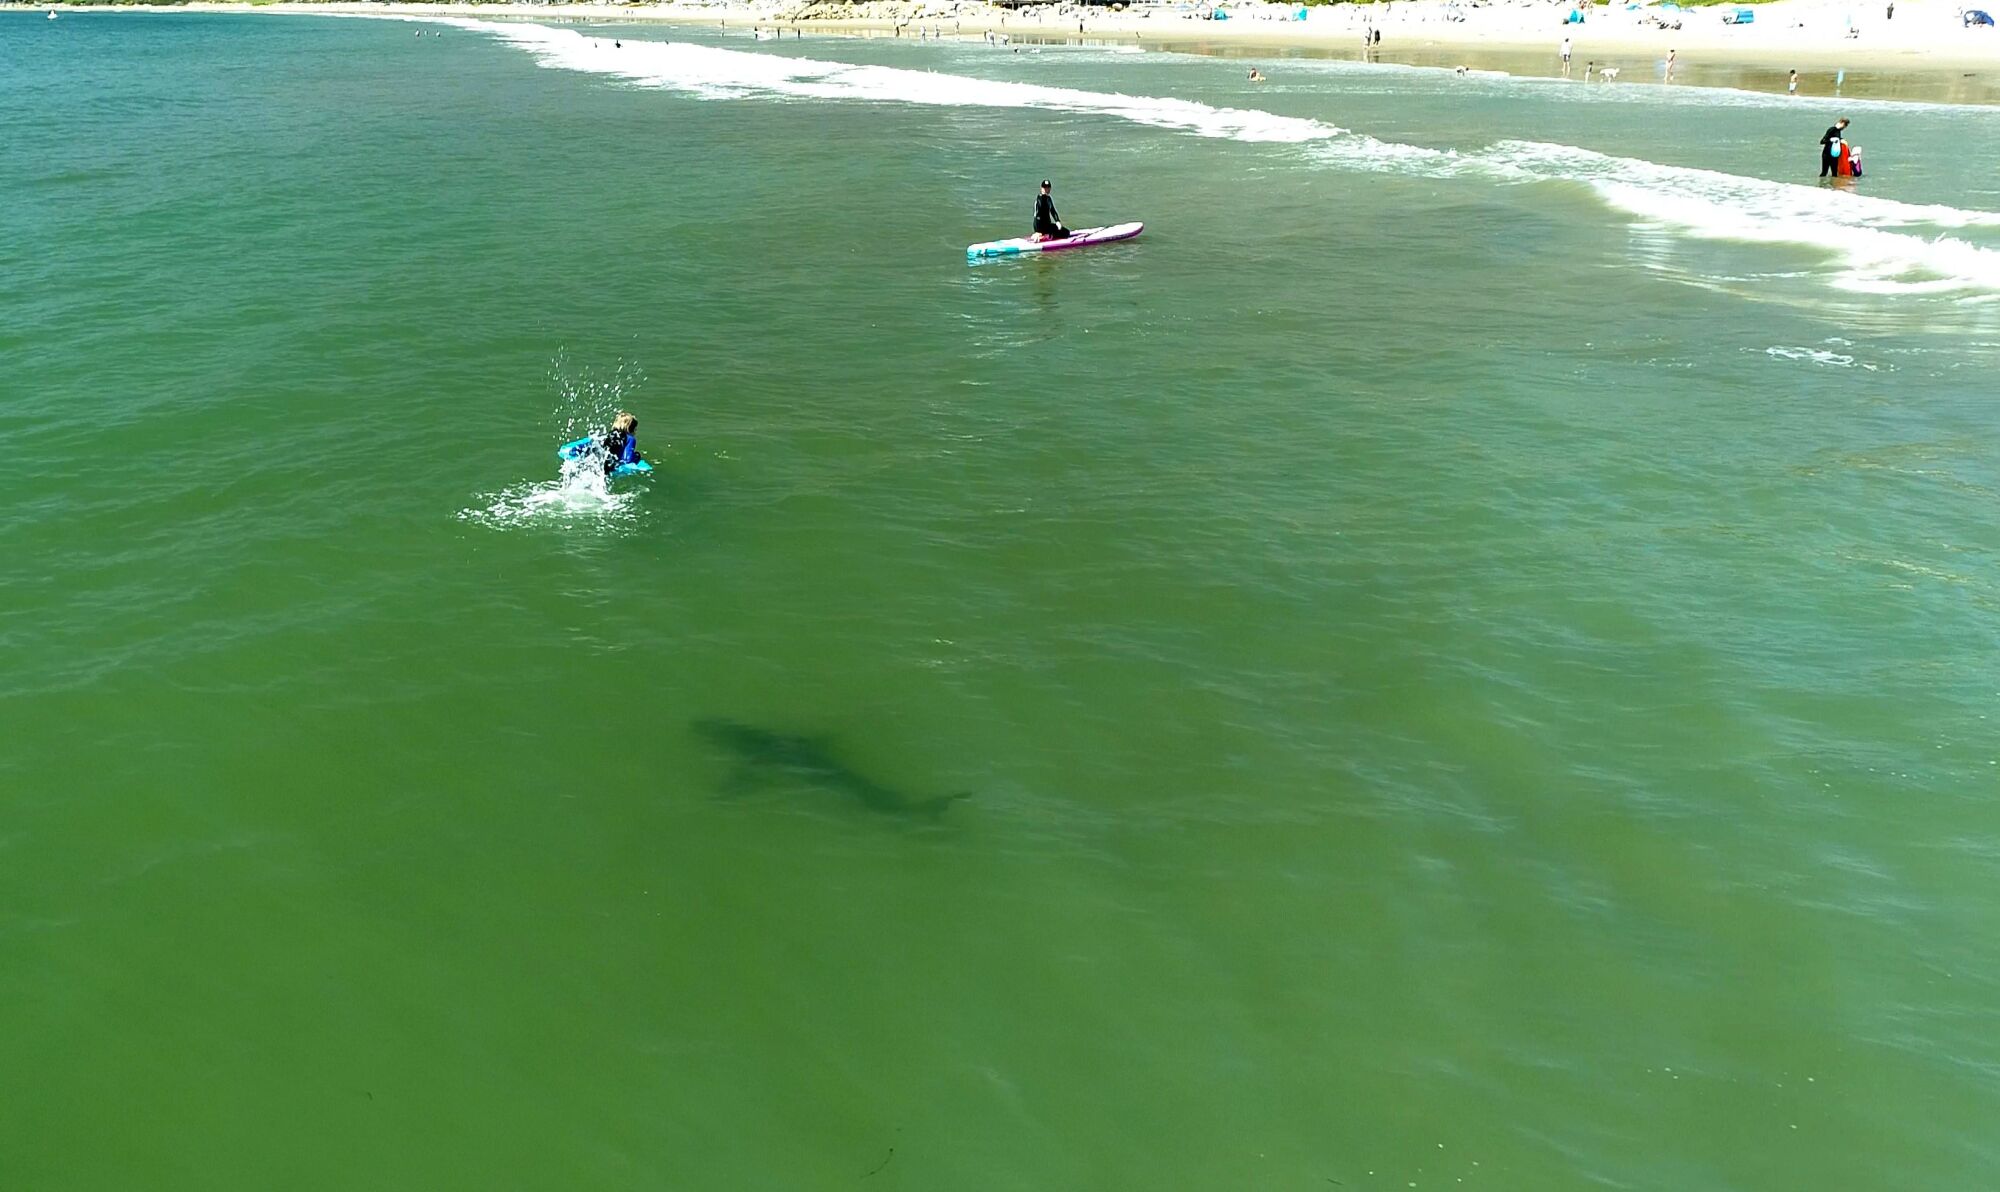 A great white shark swims near surfers.